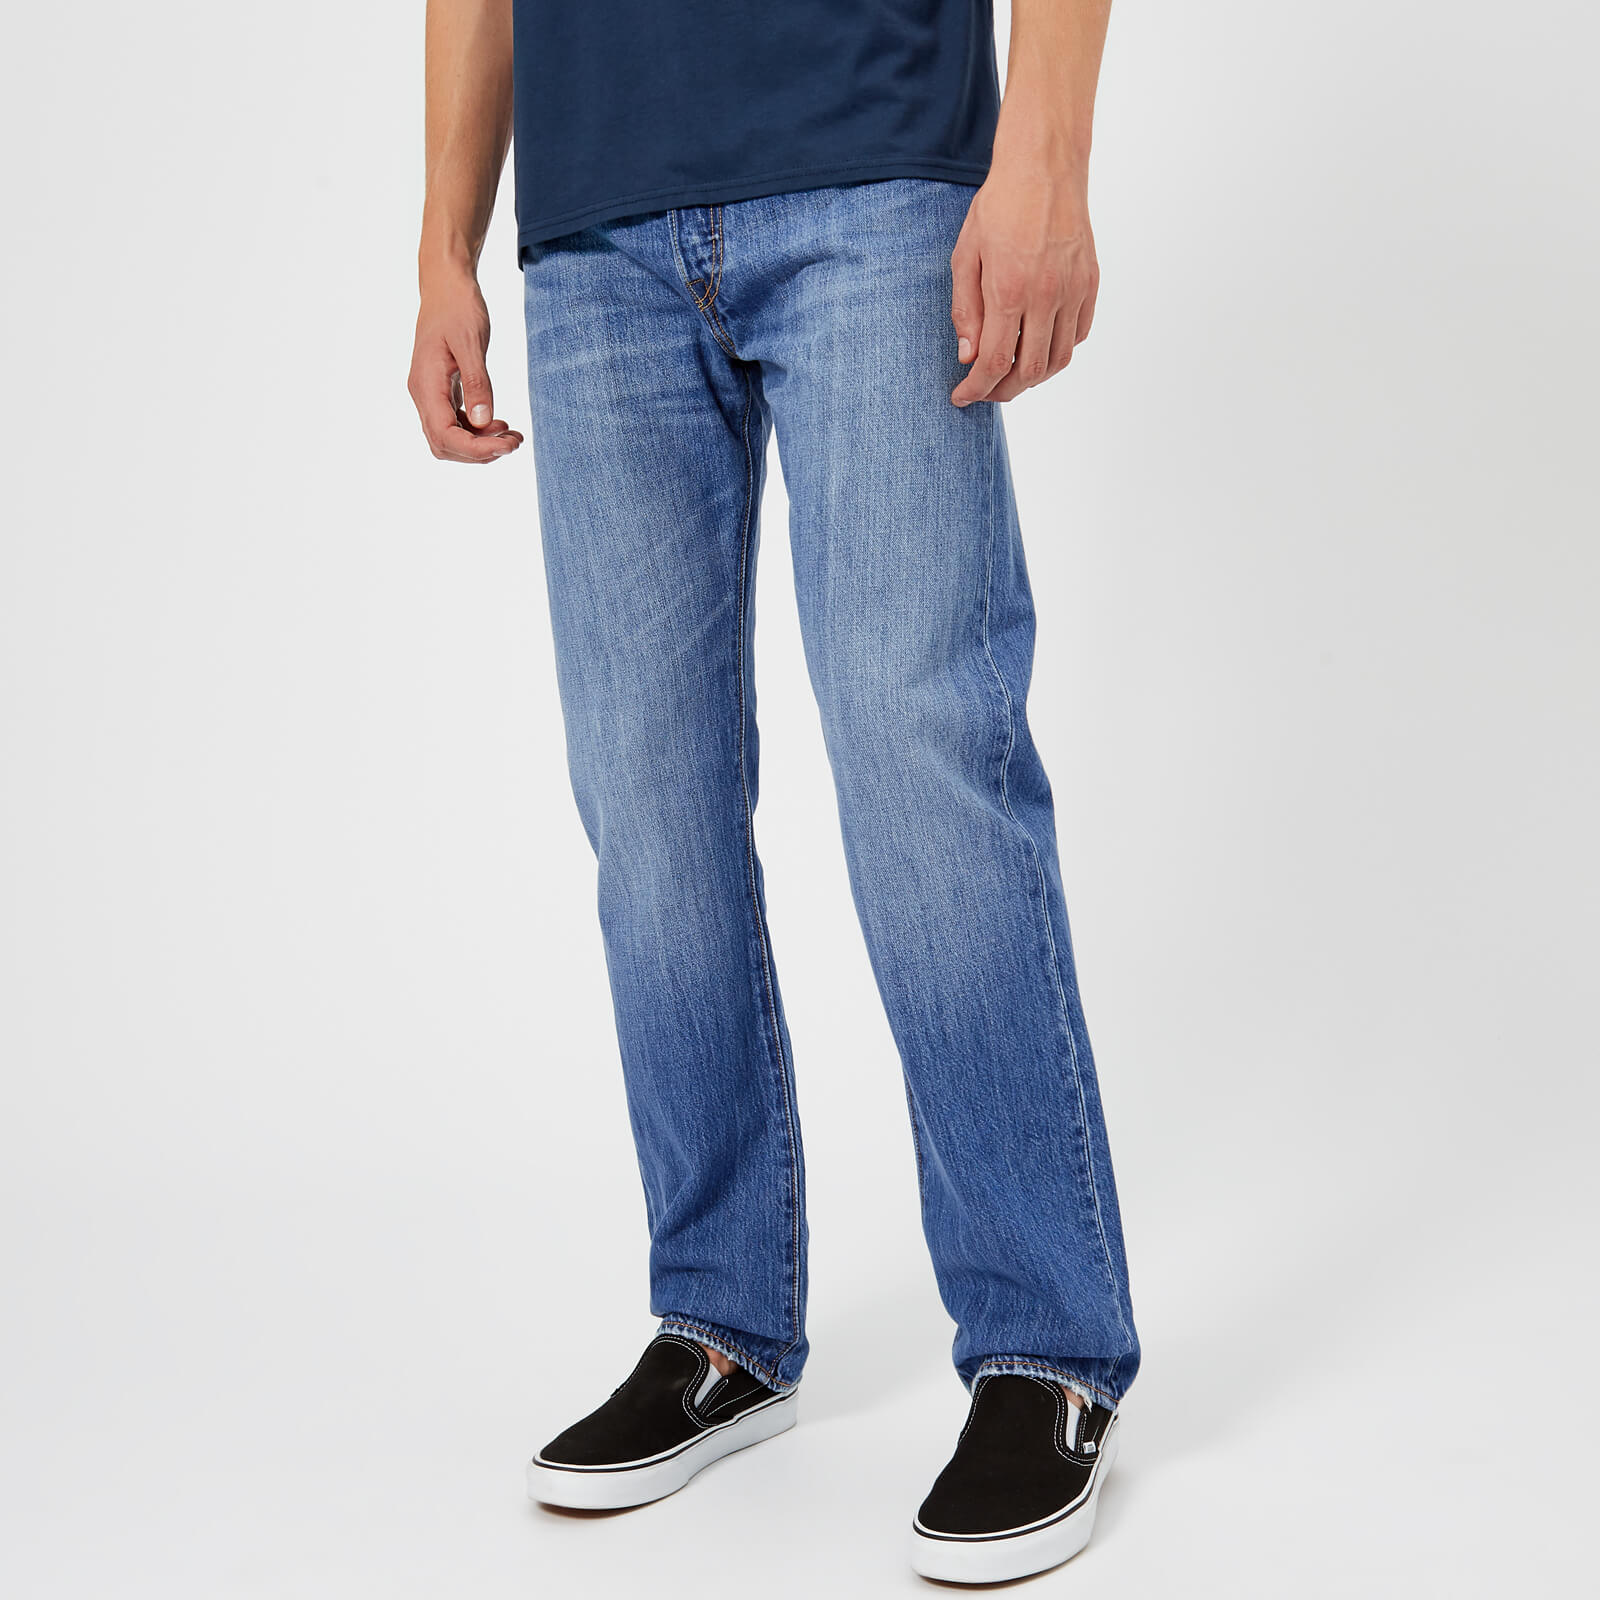 501 Original Fit Jeans - Rocky Road 